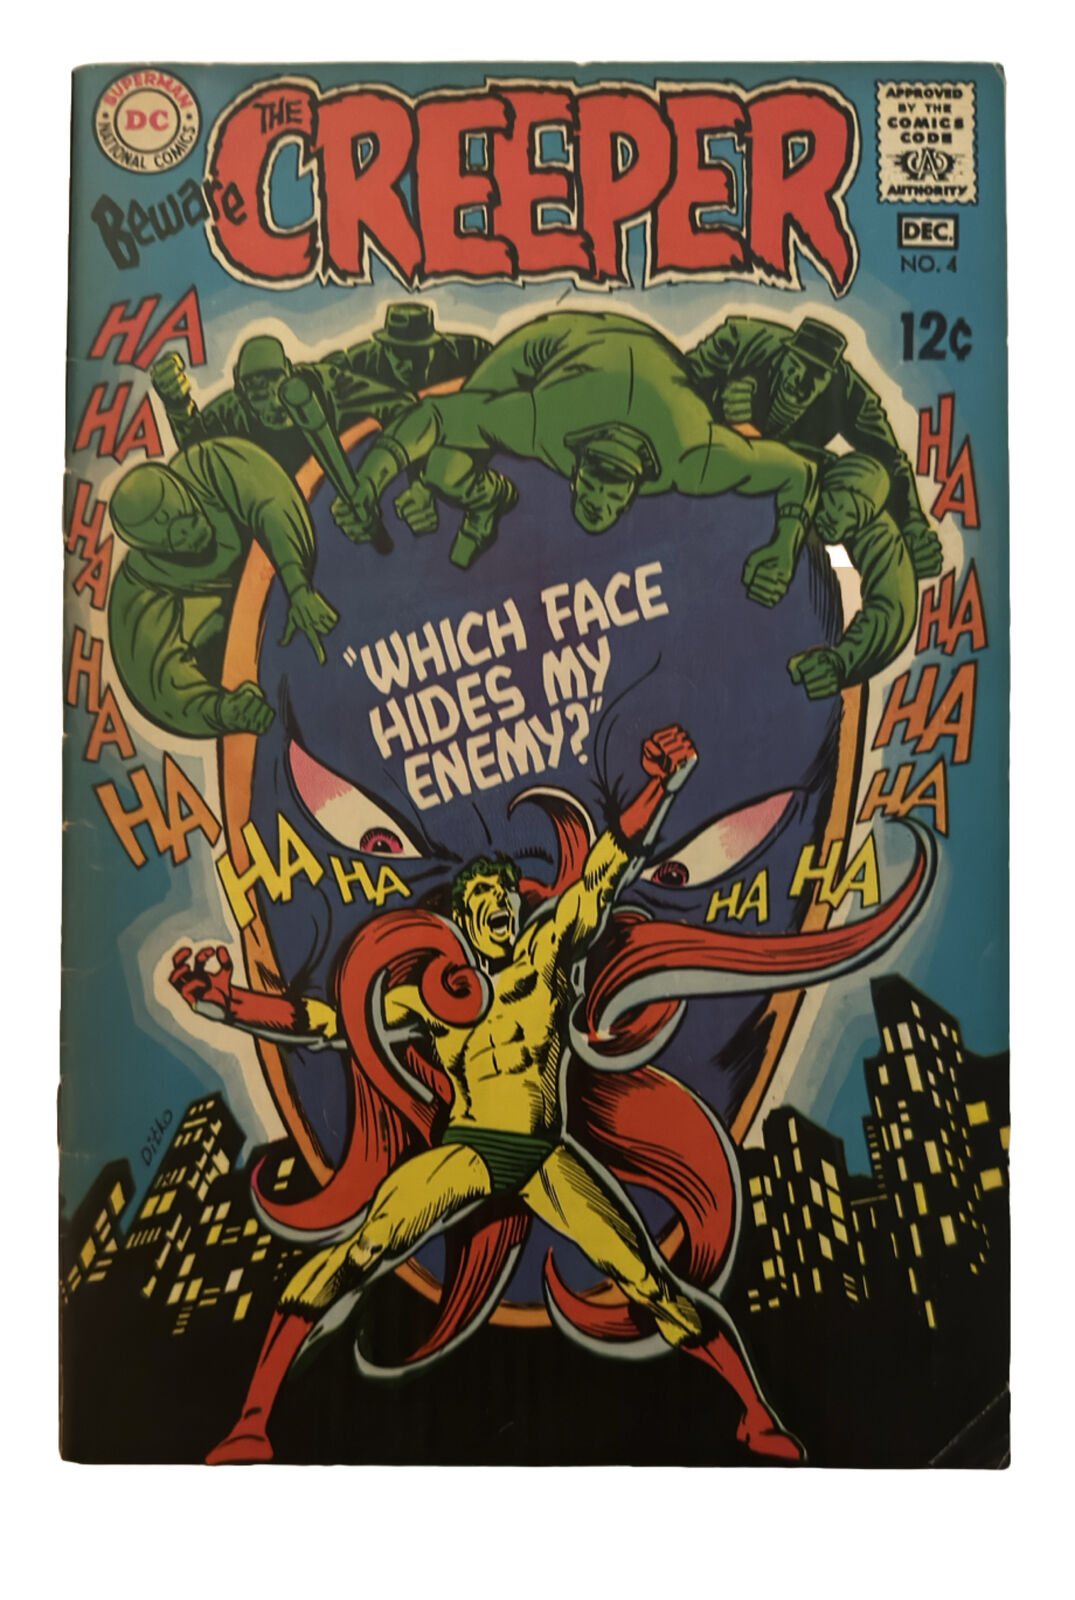 The Creeper #4 FN- 1968 Steve Ditko Cover